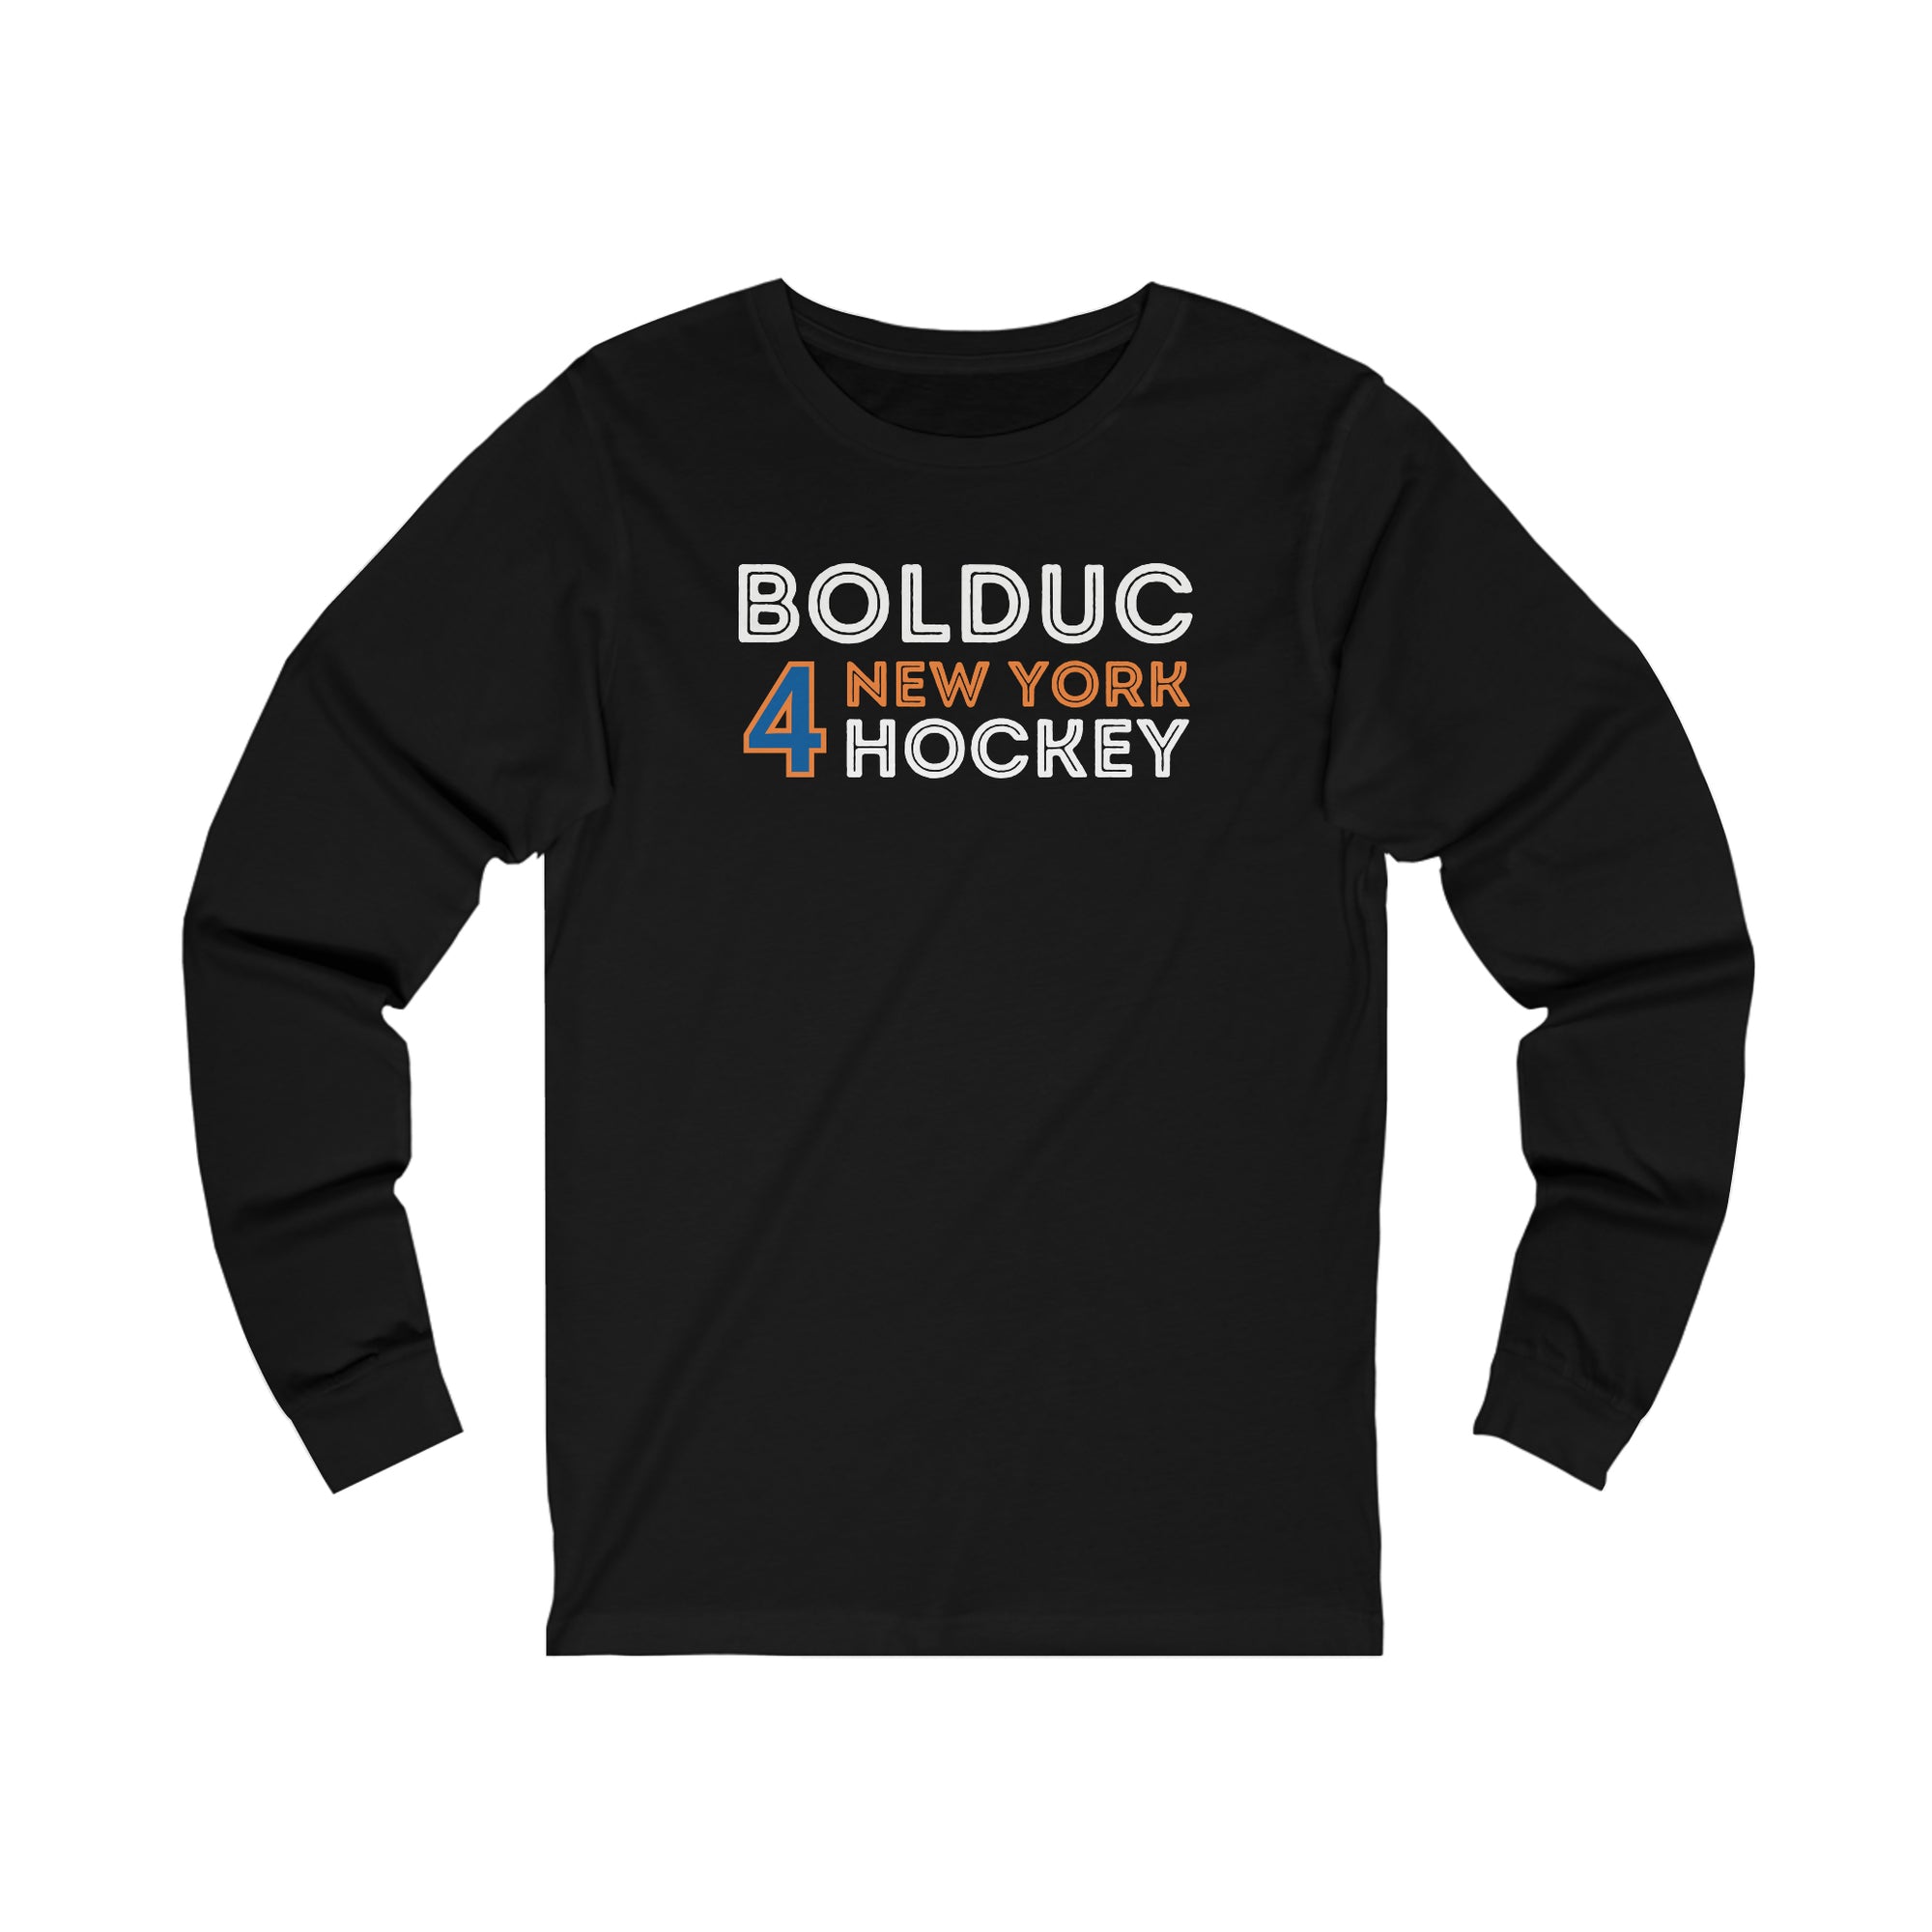 Bolduc 4 New York Hockey Grafitti Wall Design Unisex Jersey Long Sleeve Shirt